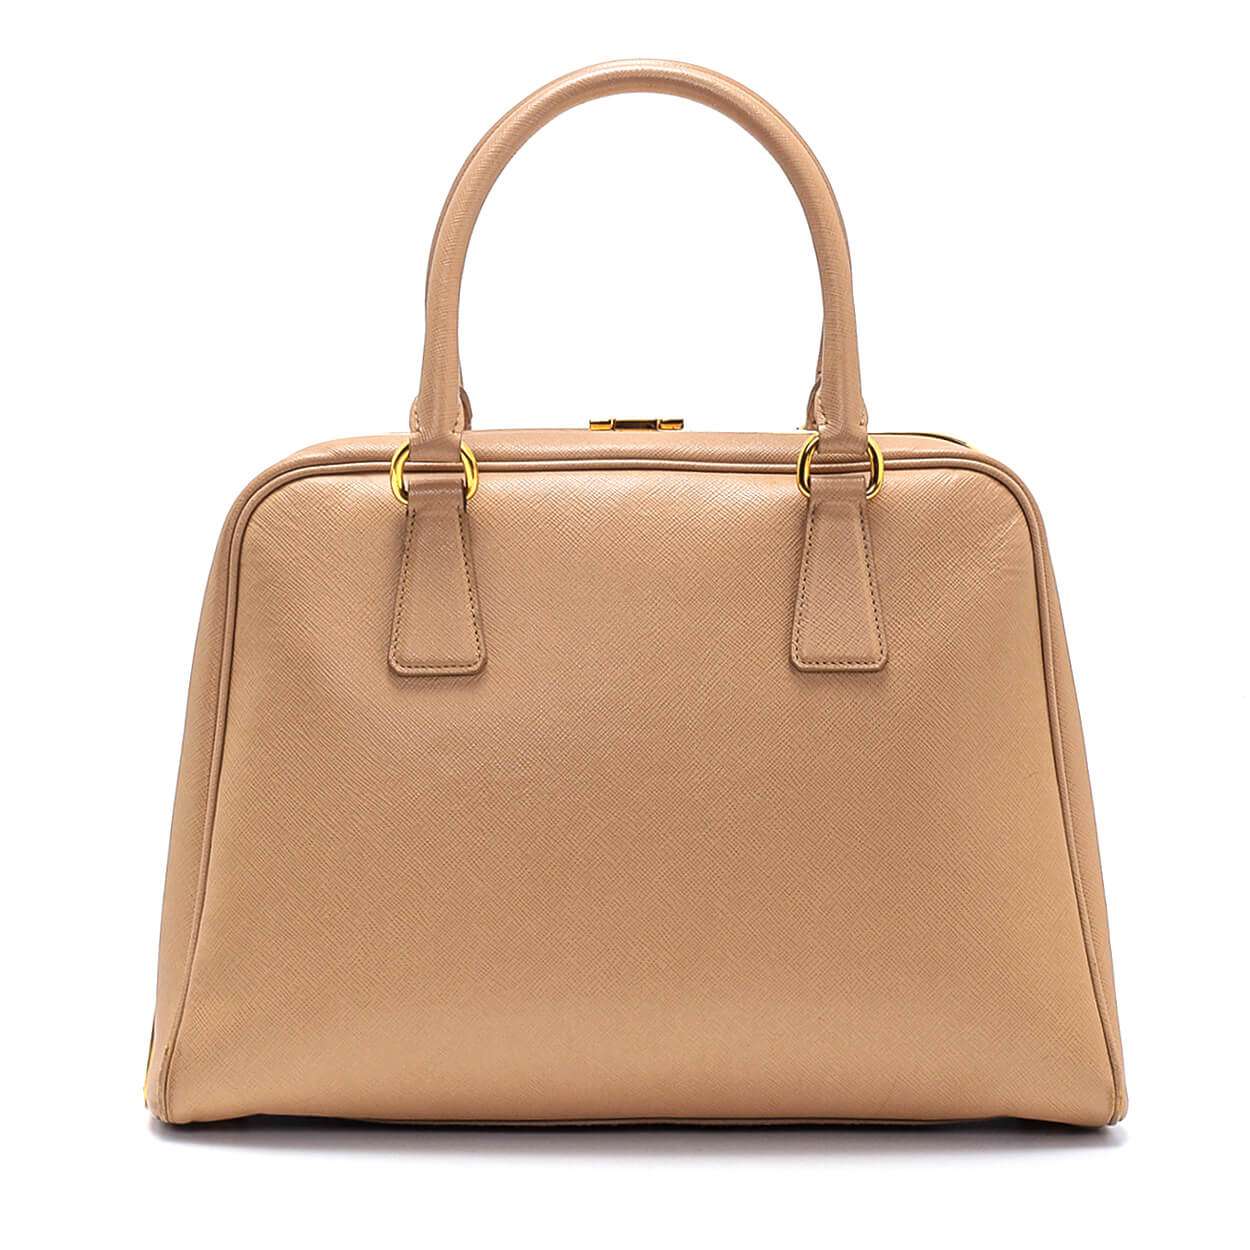 Prada - Beige Saffiano Leather Pyramid Frame Top Handle Bag 